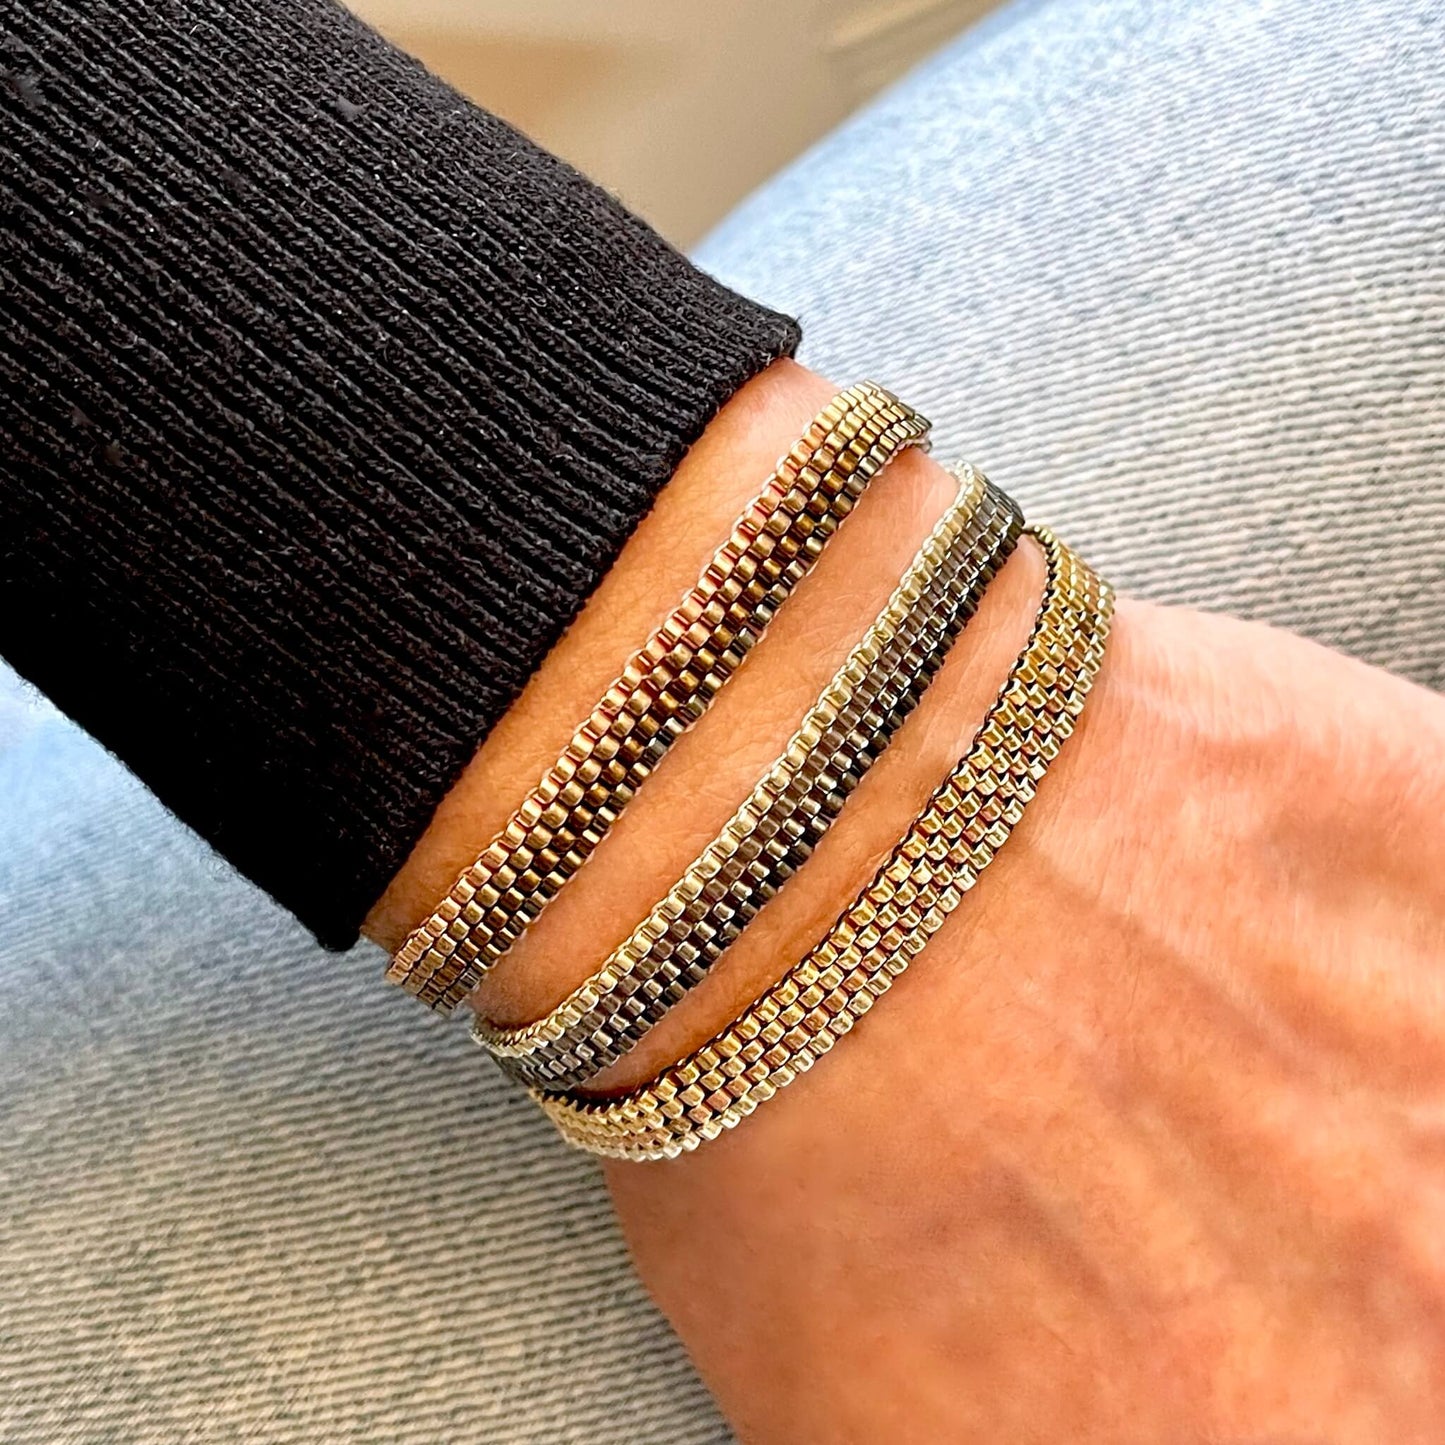 Popular beaded bracelets | Woven metallic thin beaded bracelets.